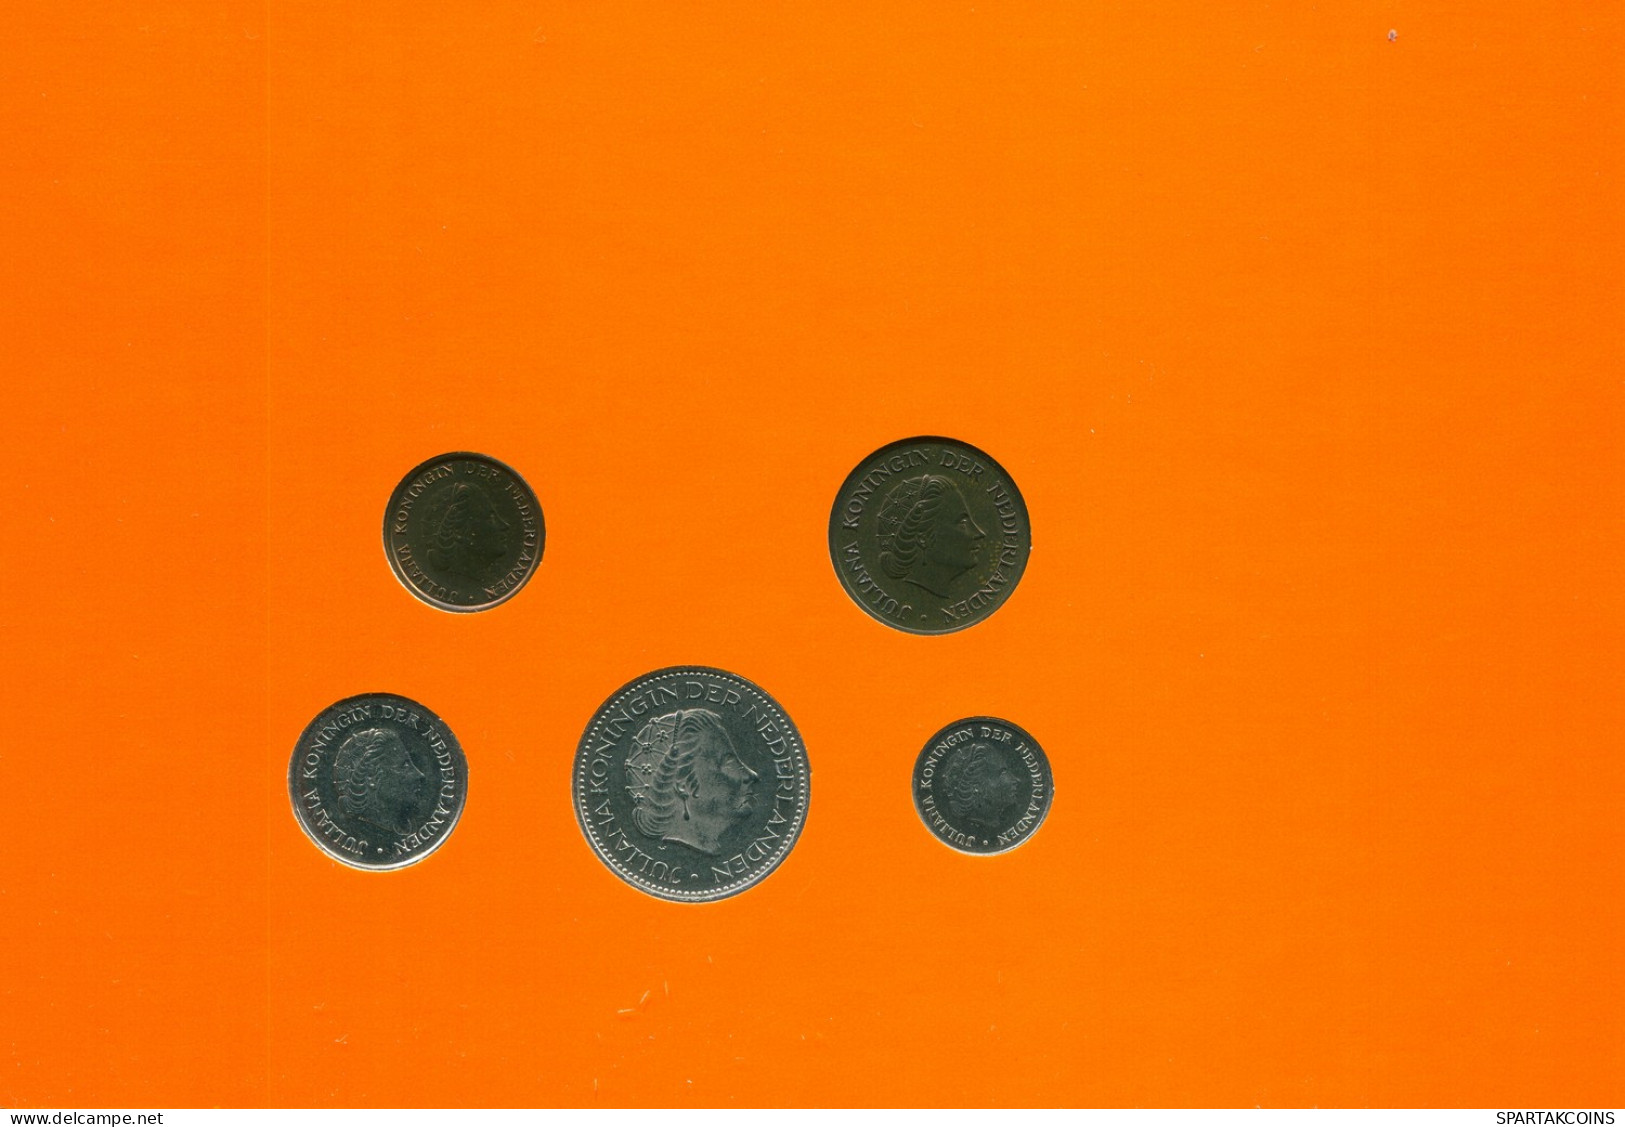 NETHERLANDS 1977 MINT SET 5 Coin #SET1015.7.U - Jahressets & Polierte Platten